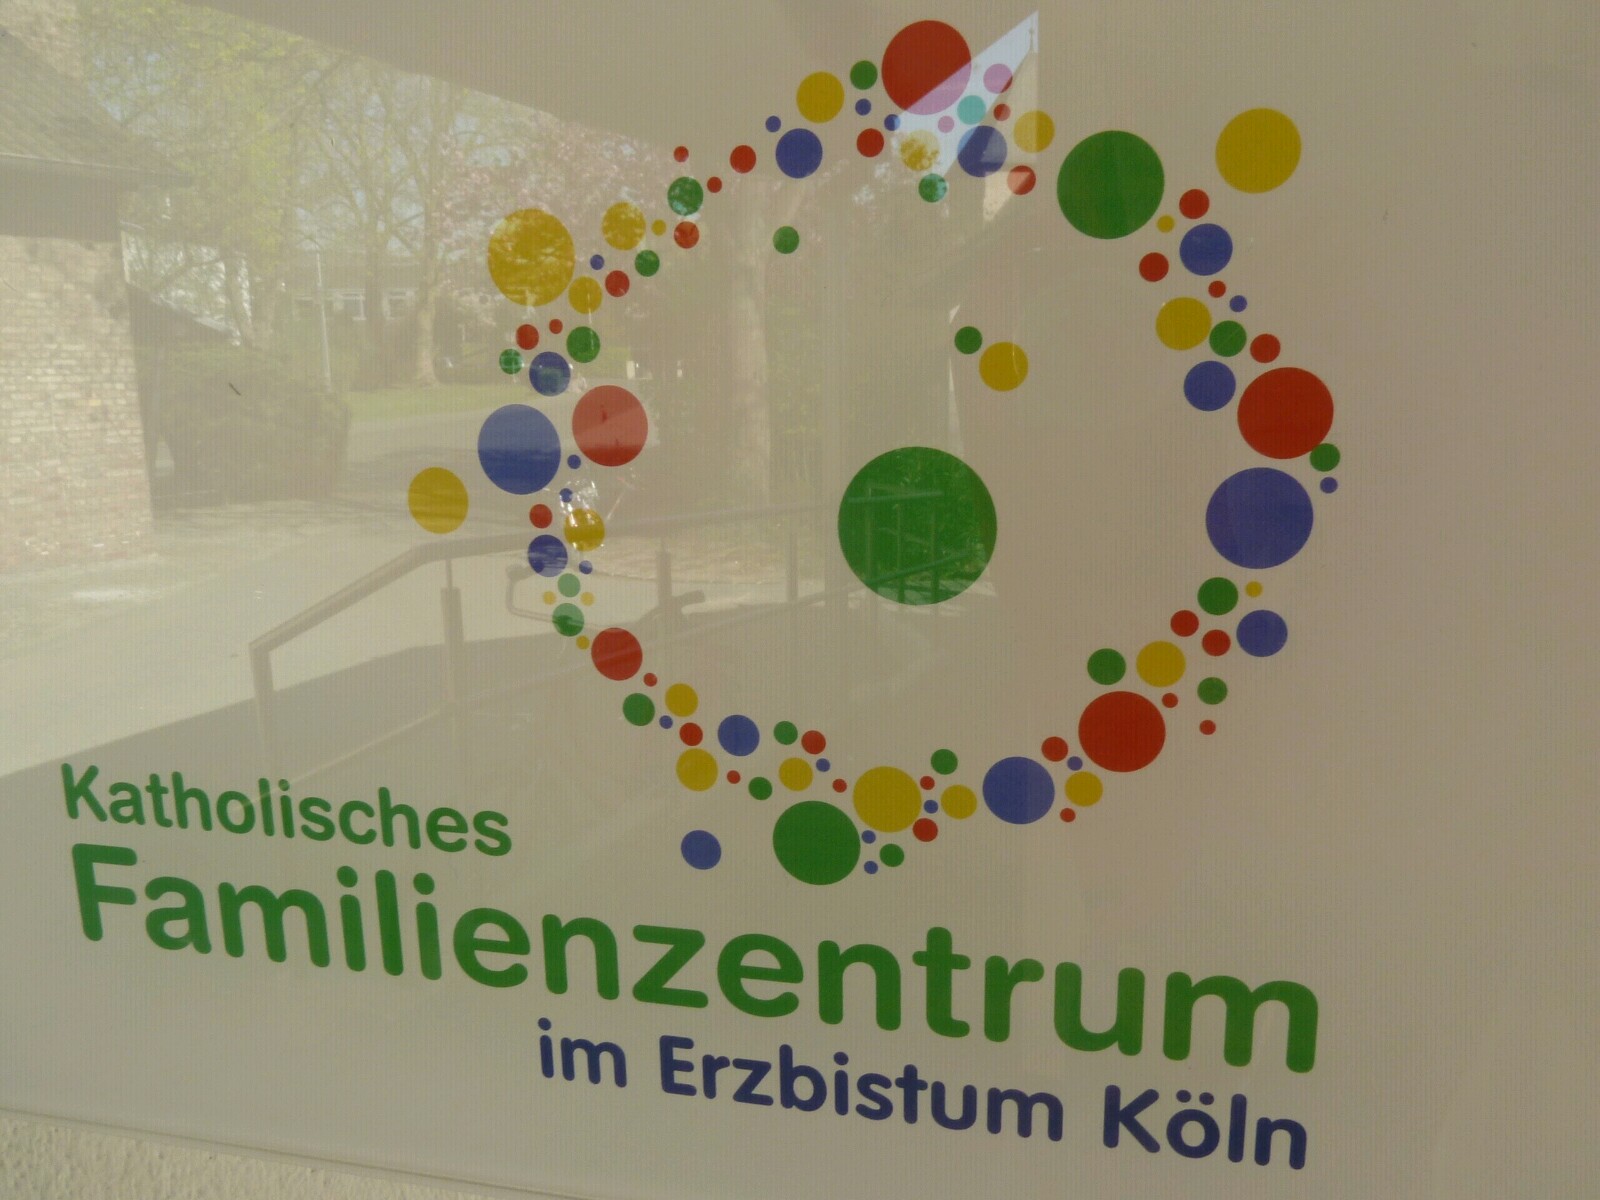 Logo Familienzentrum